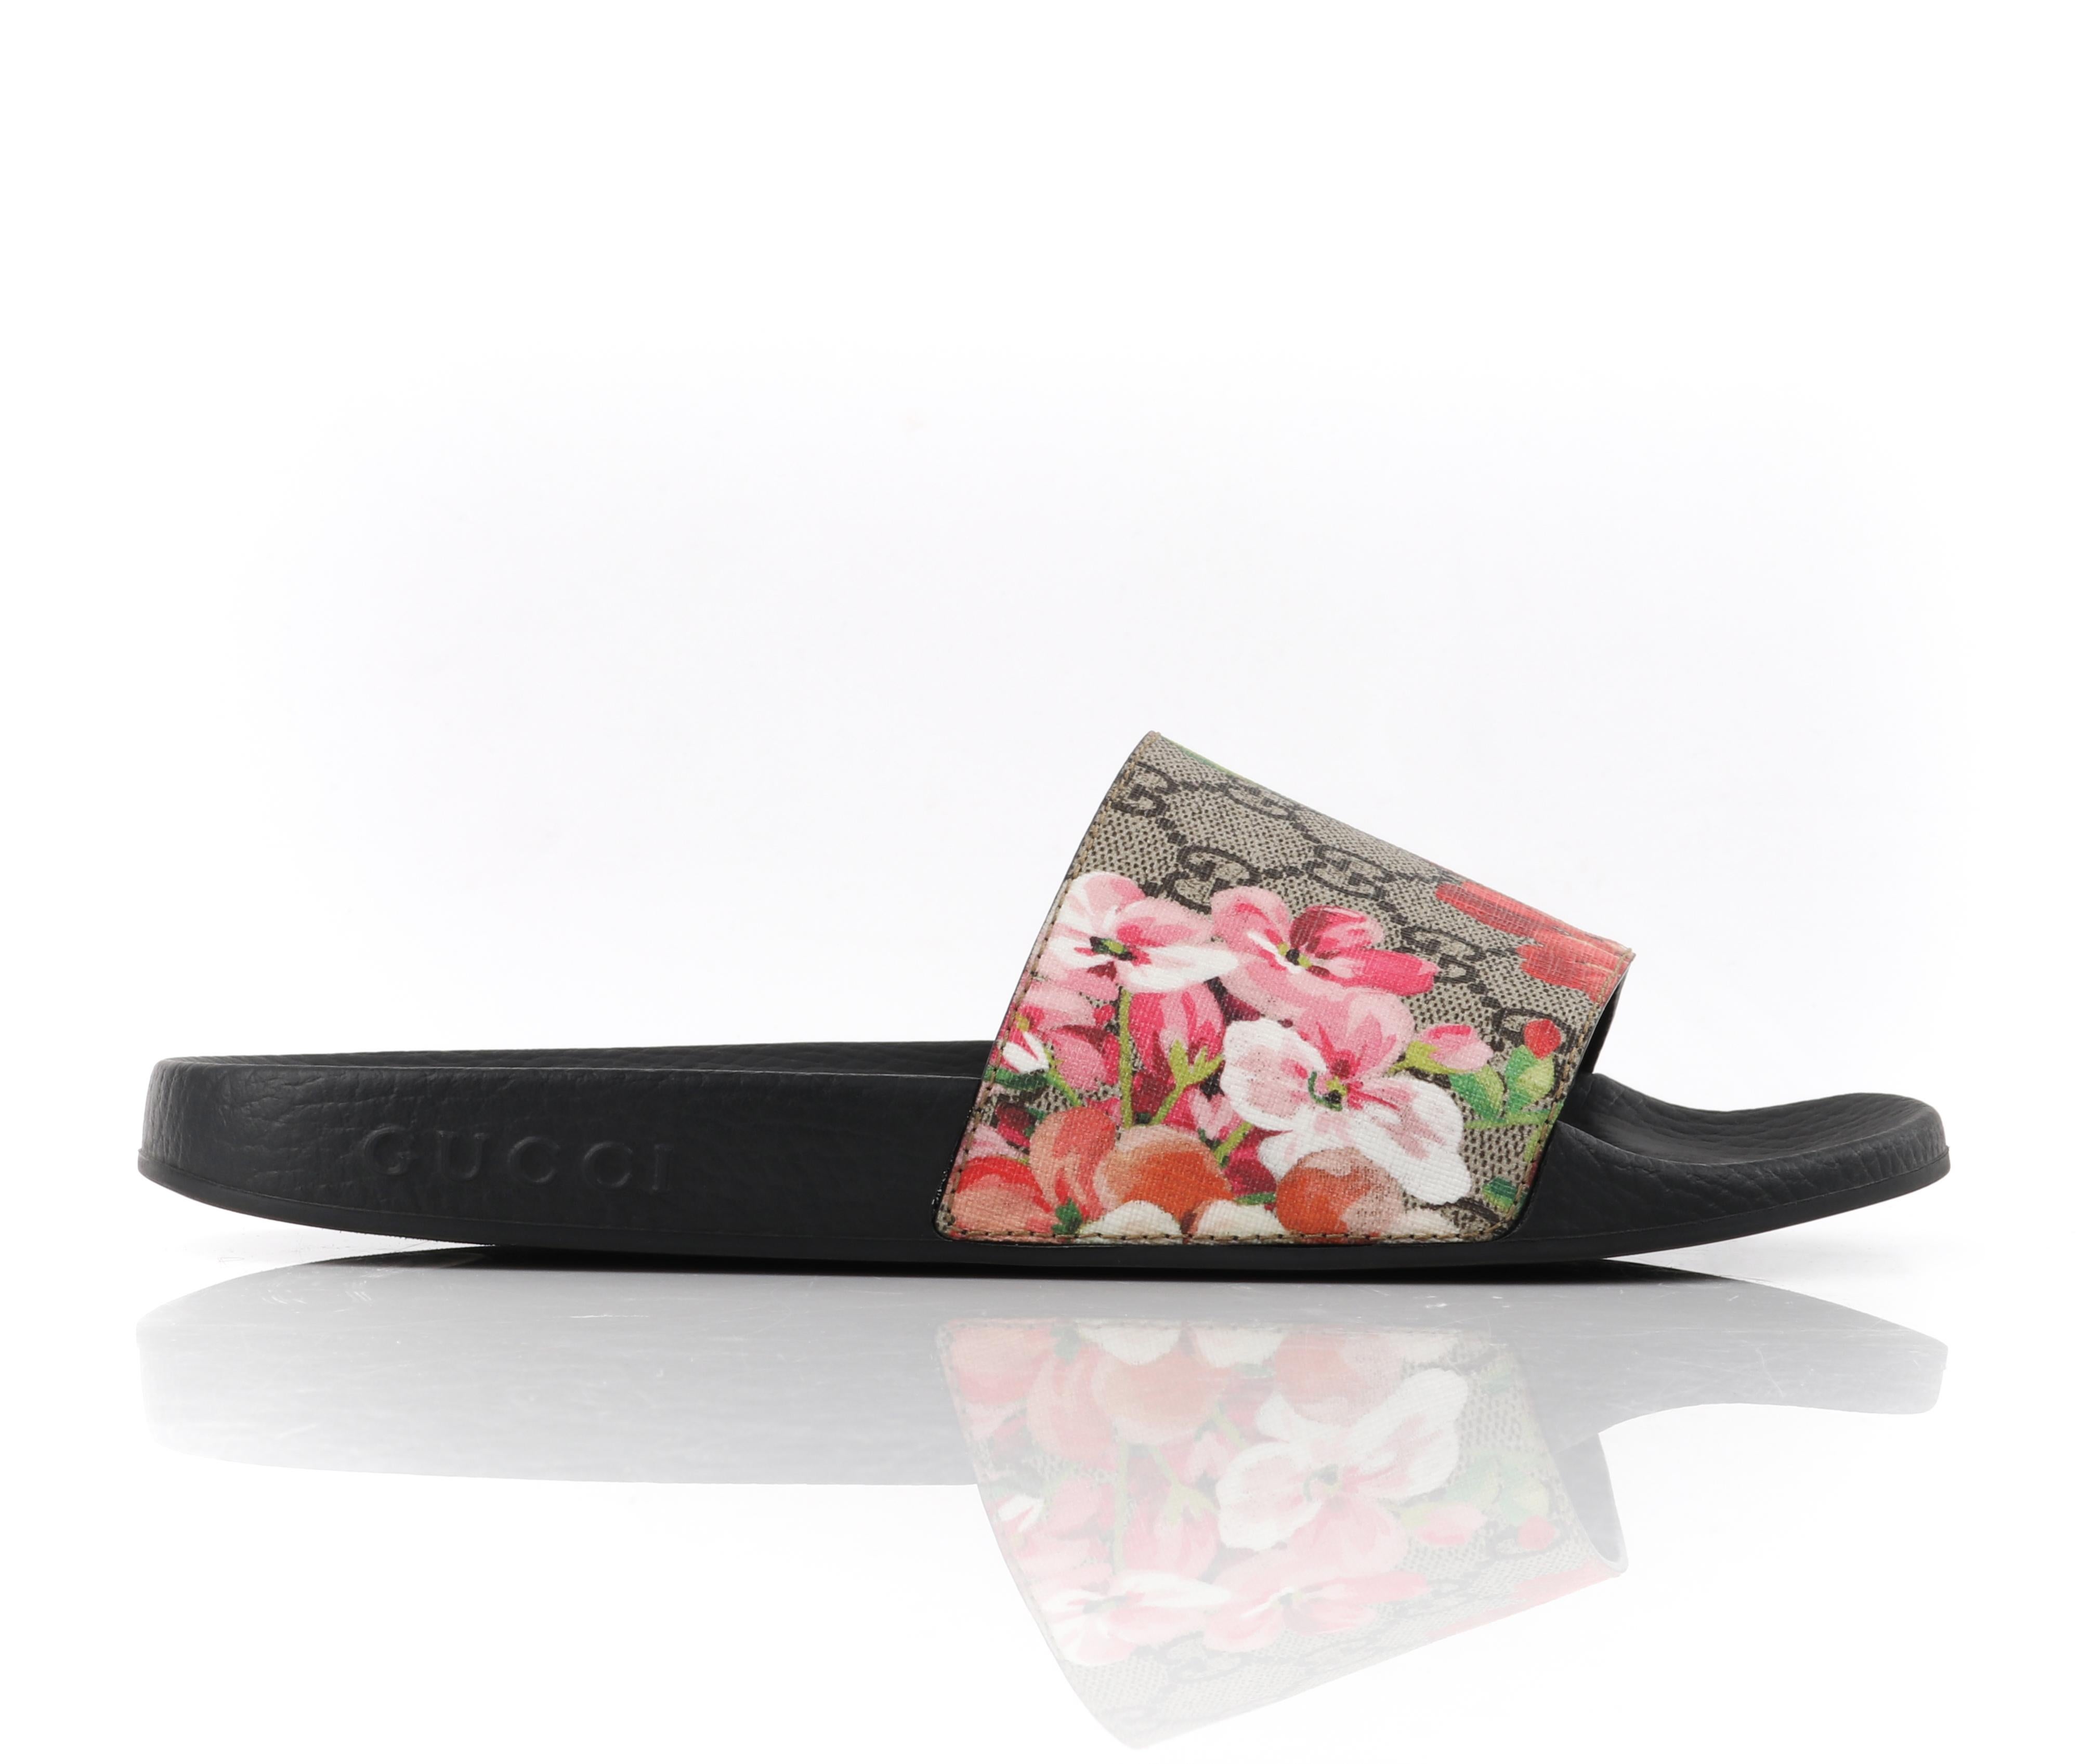 GUCCI “GG Supreme Blooms” Floral Print Supreme Slide Sandals NIB
 
Brand / Manufacturer: Gucci 
Designer: Alessandro Michele
Manufacturer Style Name: Supreme Slide Sandals
Marked Size: “37”
Style: Slide sandal
Color(s): “GG Blooms” print; shades of